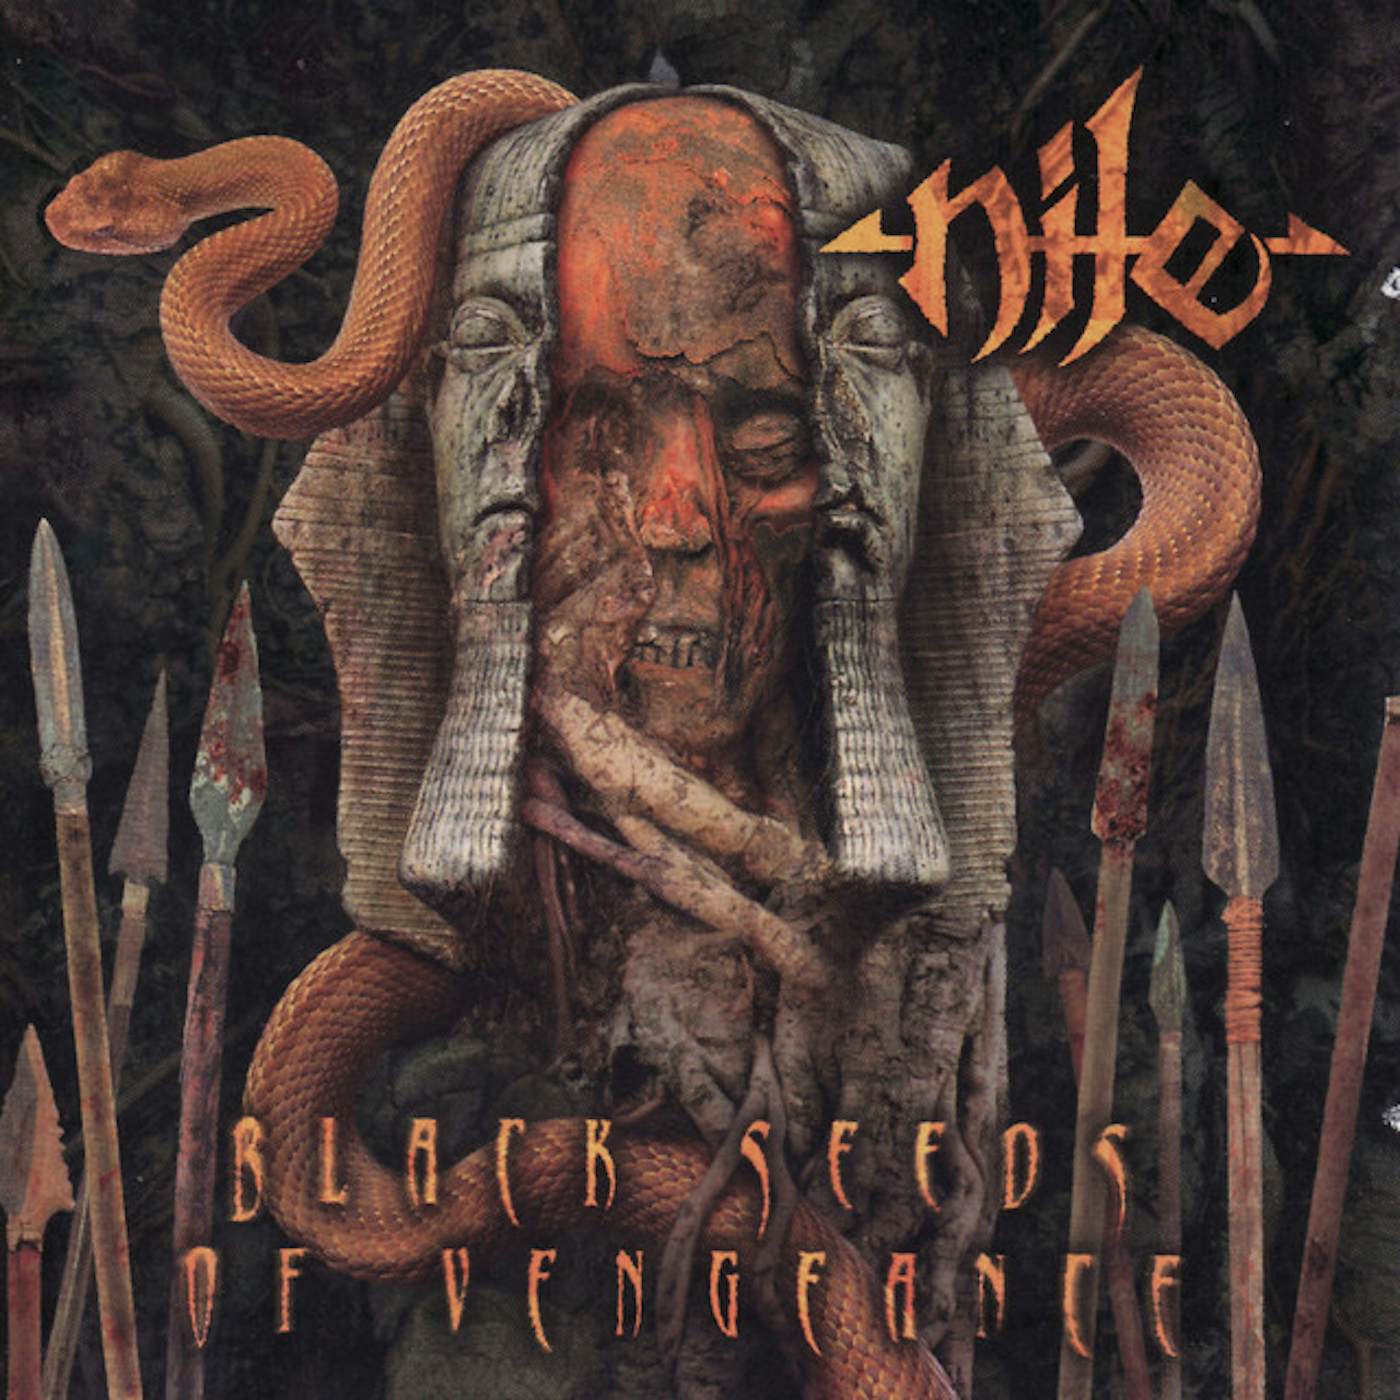 Nile Black Seeds Of Vengeance Vinyl Record